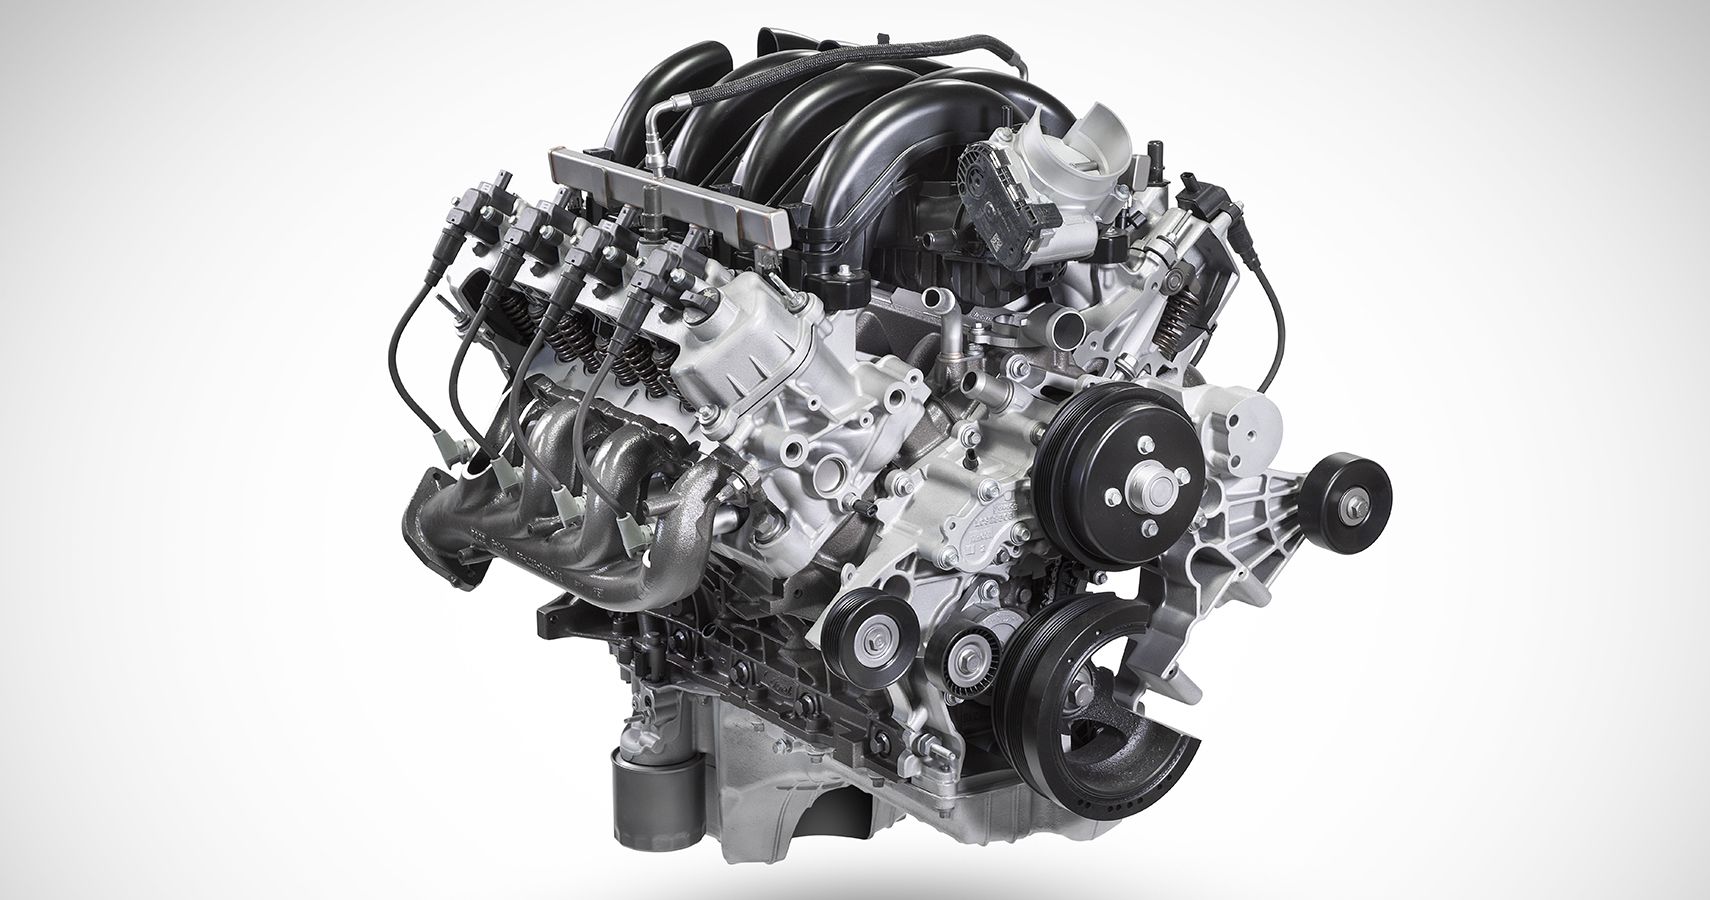 Ford's Newest Crate Engine: The 430-HP 7.3-Liter Pushrod "Godzilla" V8